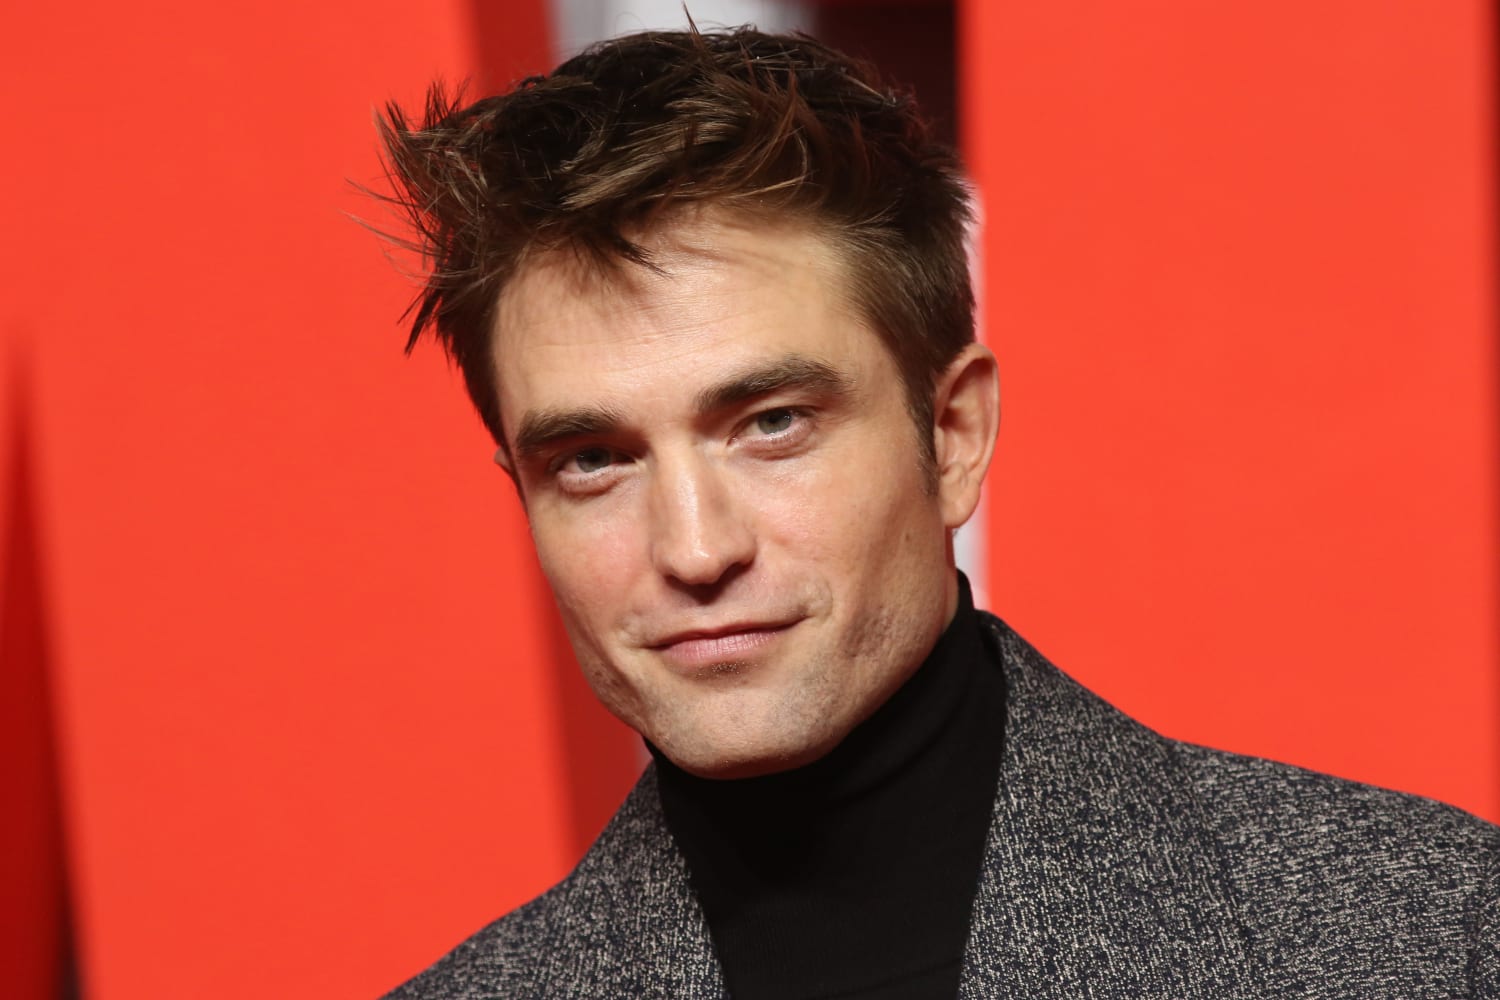 Robert Pattinson: Latest News and Updates